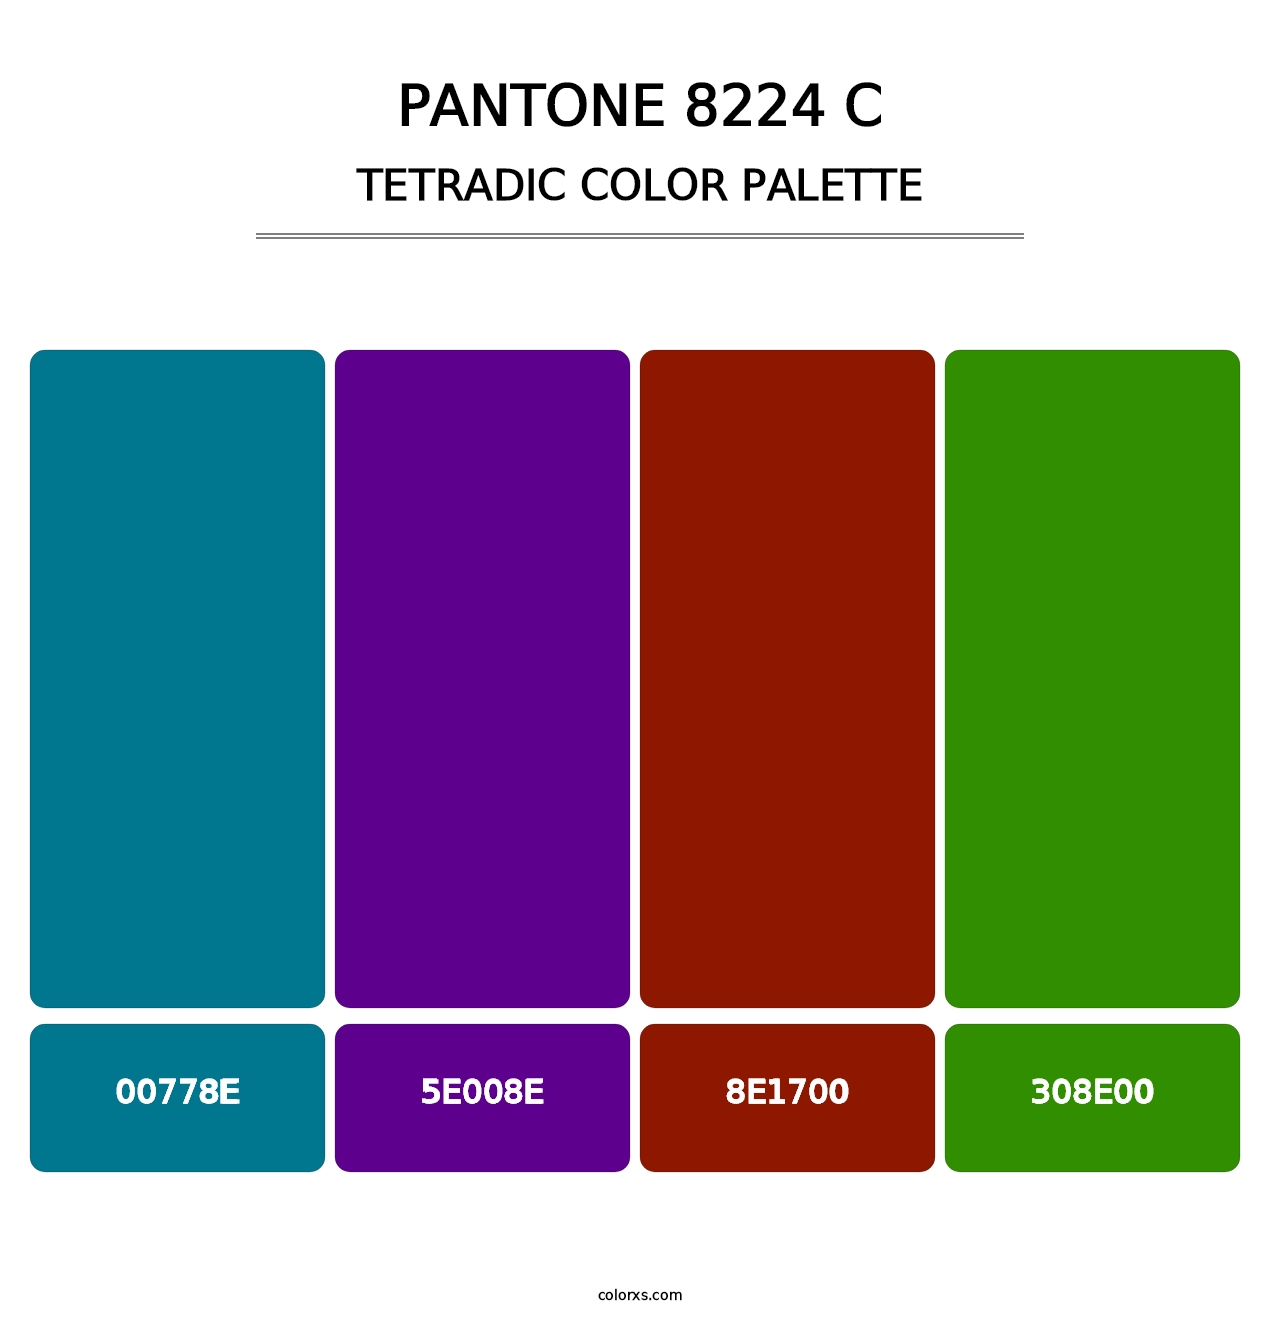 PANTONE 8224 C - Tetradic Color Palette